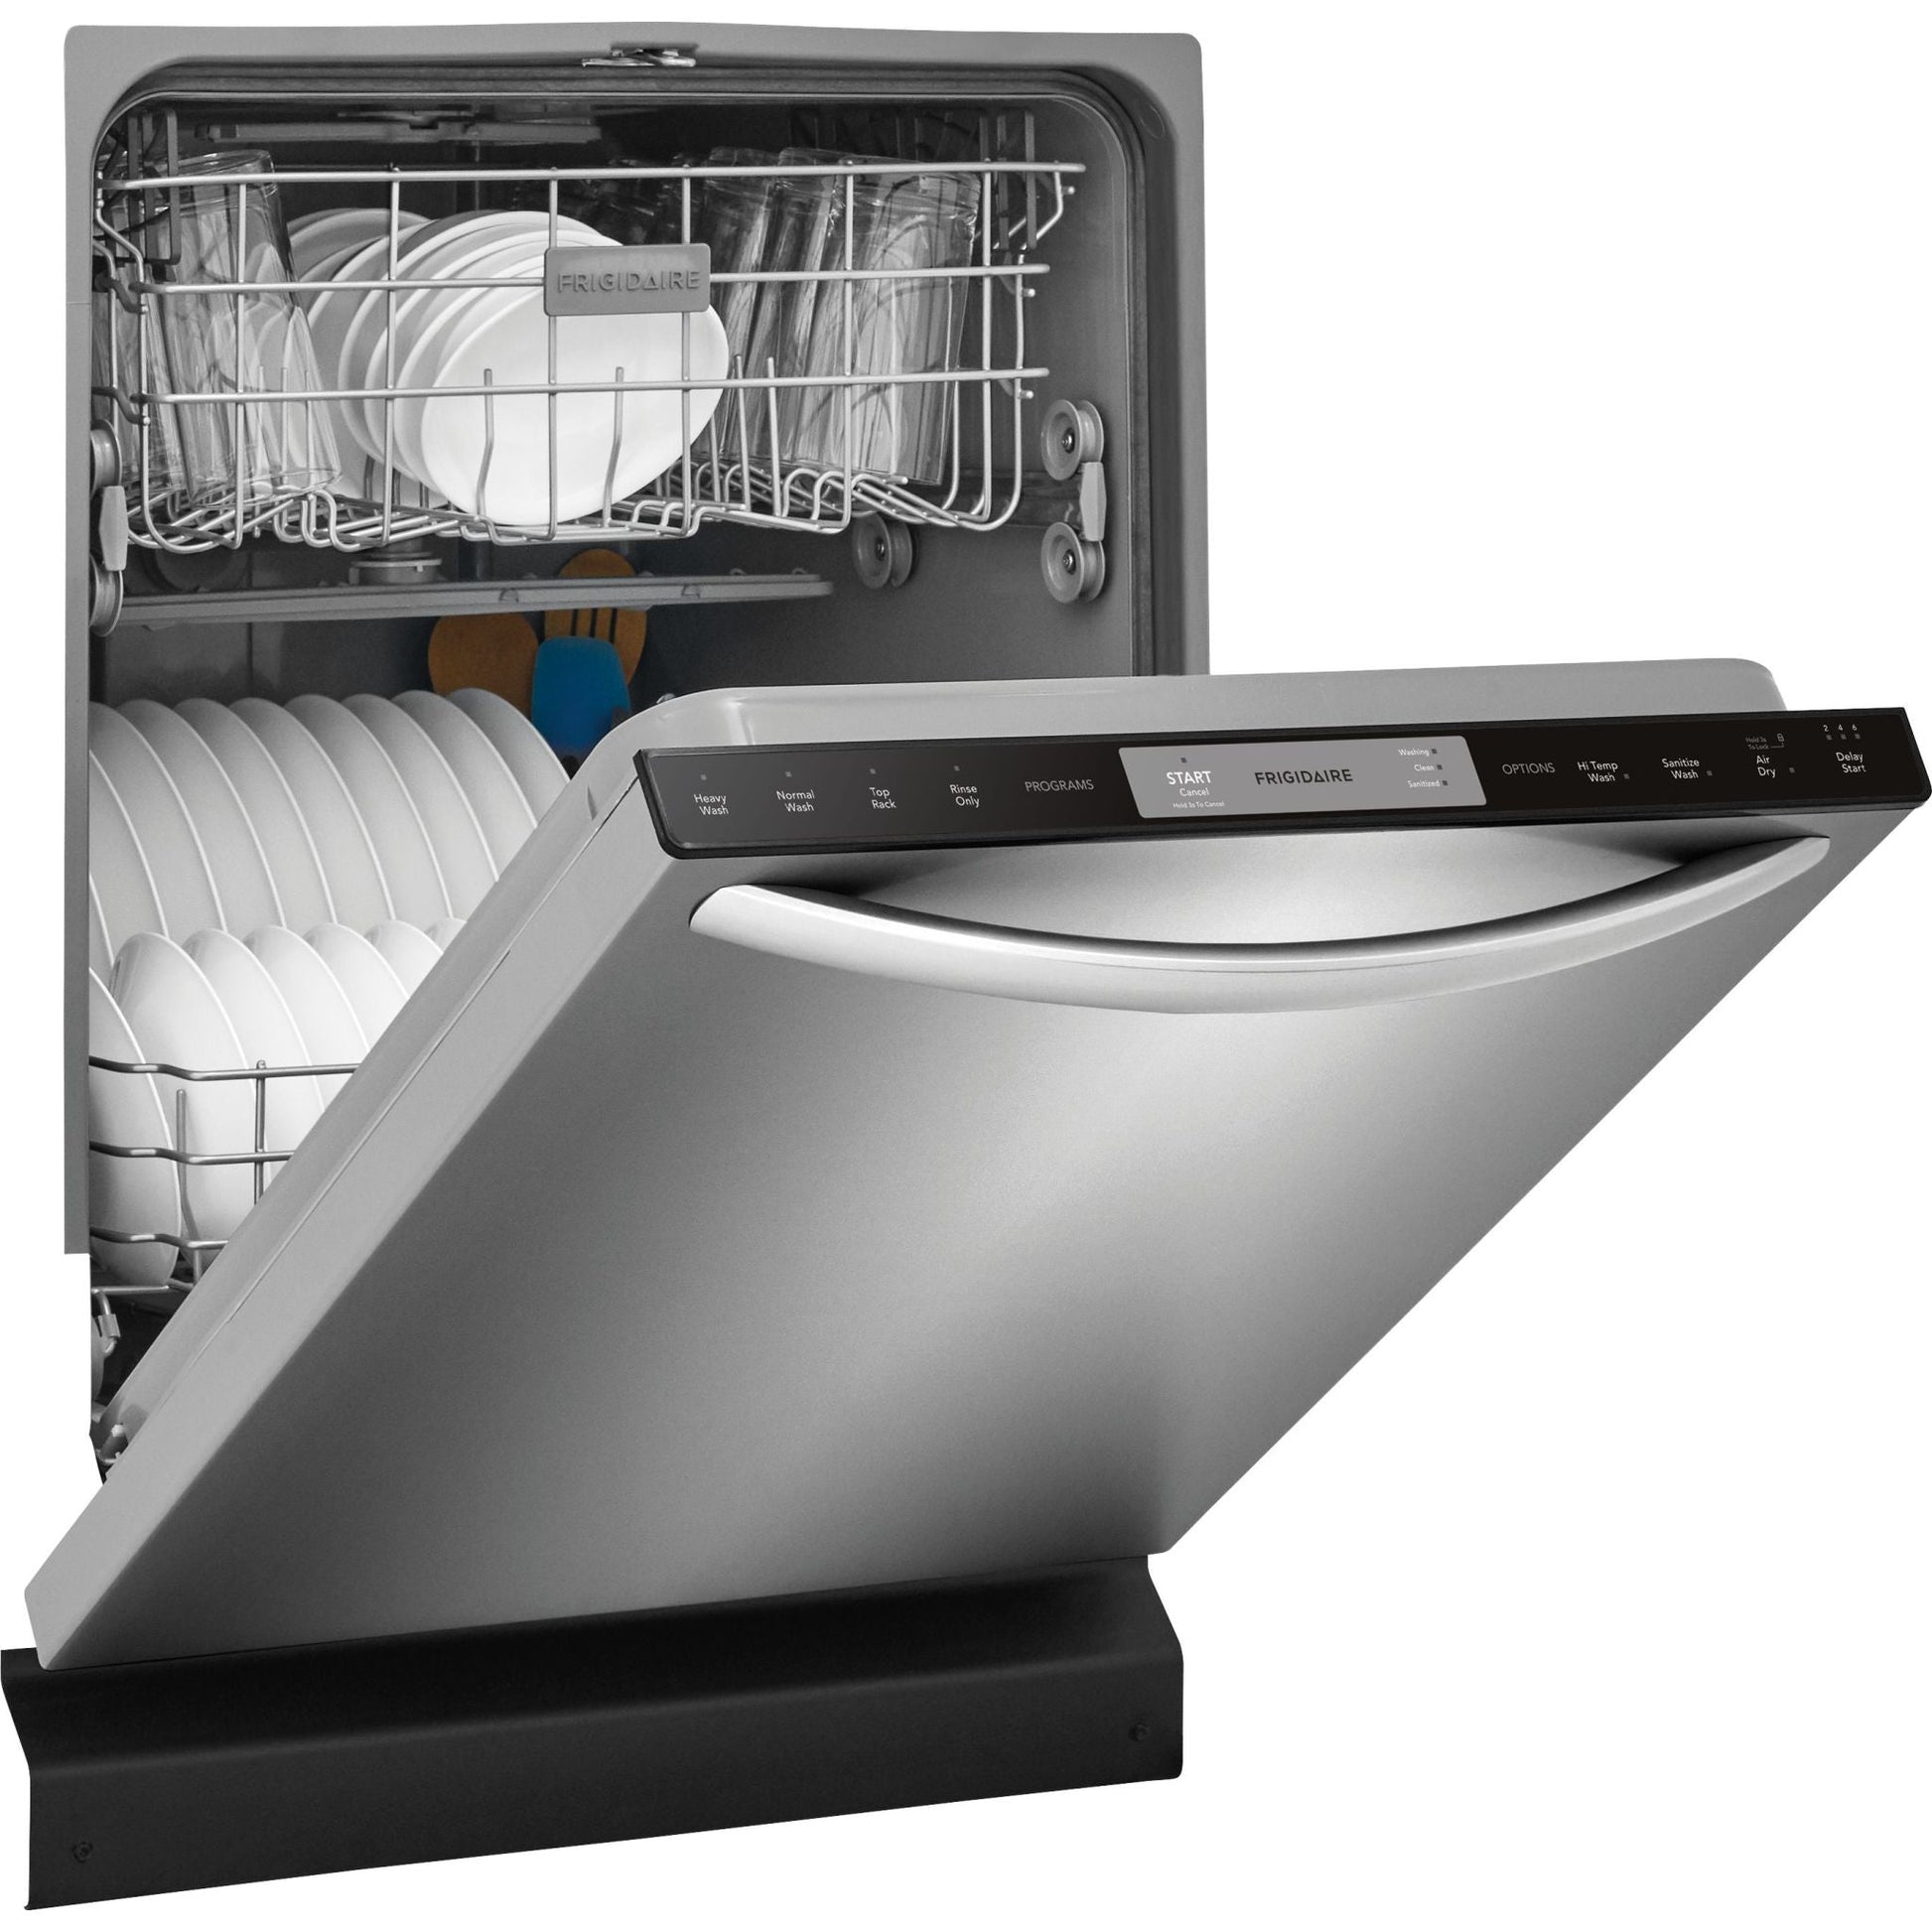 Frigidaire Dishwasher Plastic Tub (FFID2426TS) - Stainless Steel